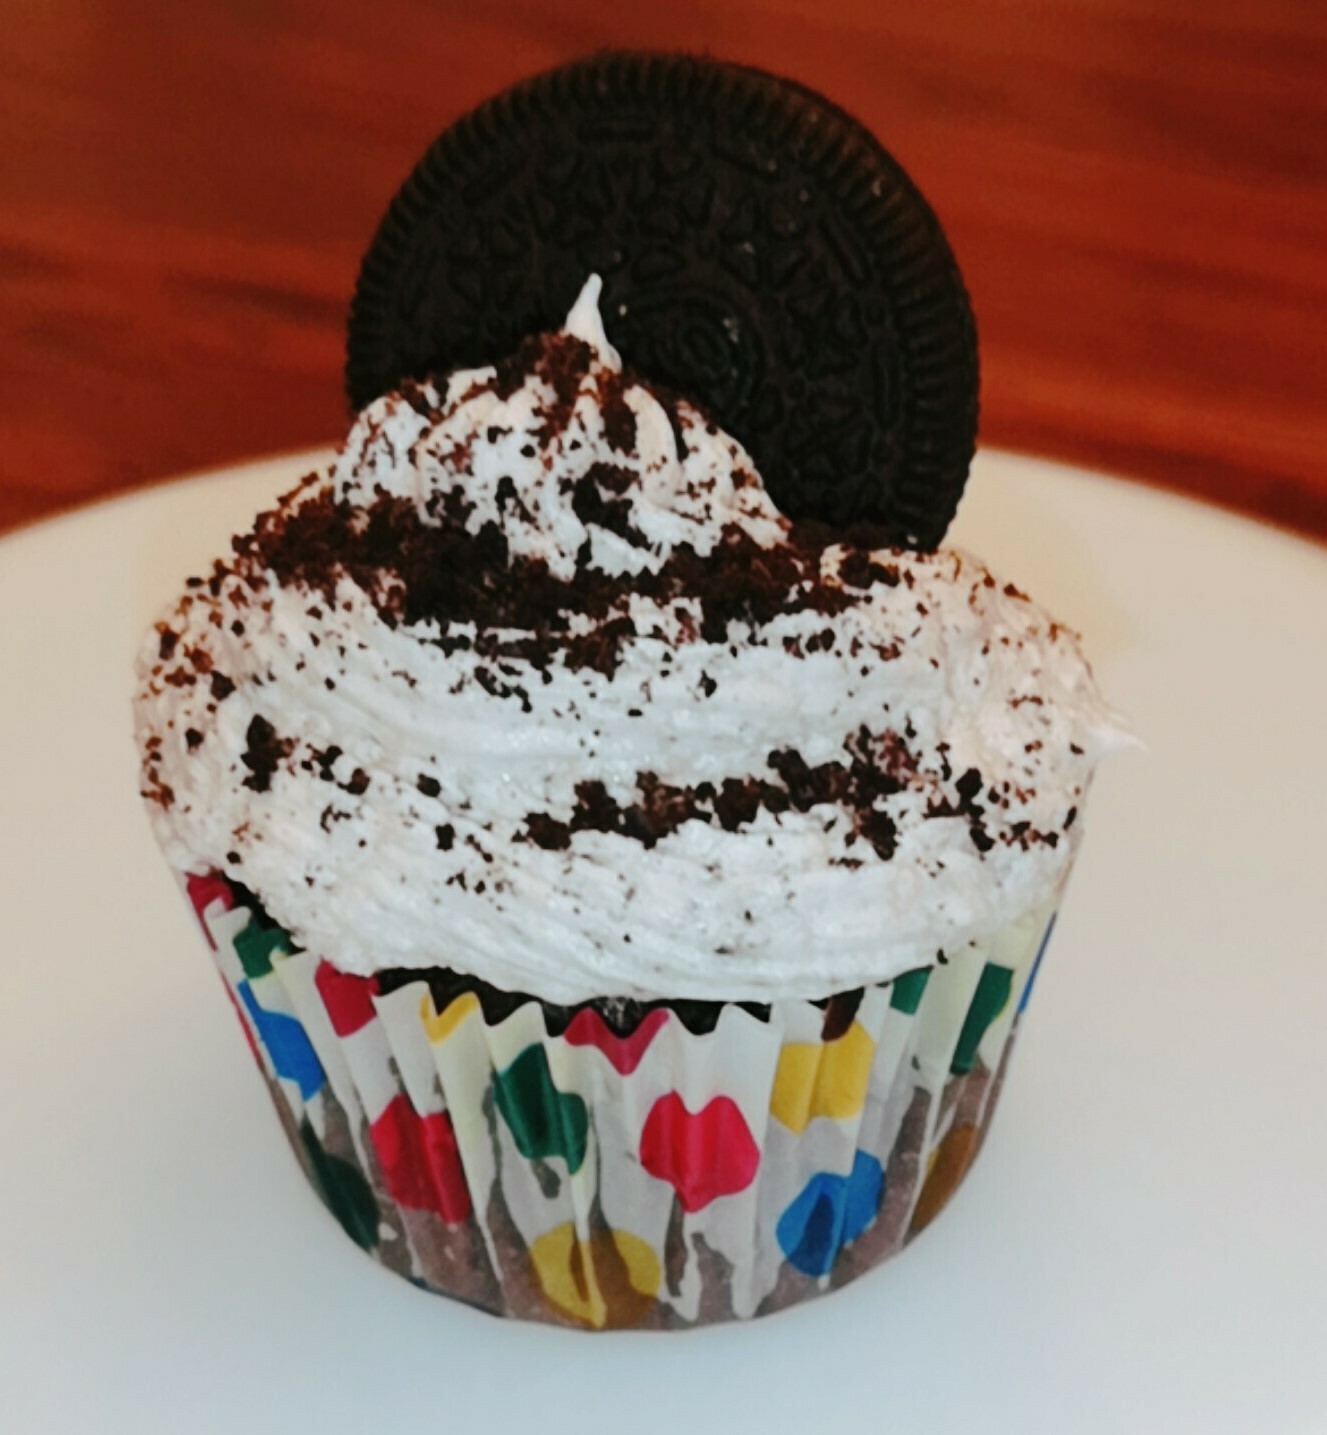 Vegan "Oreo" cupcake